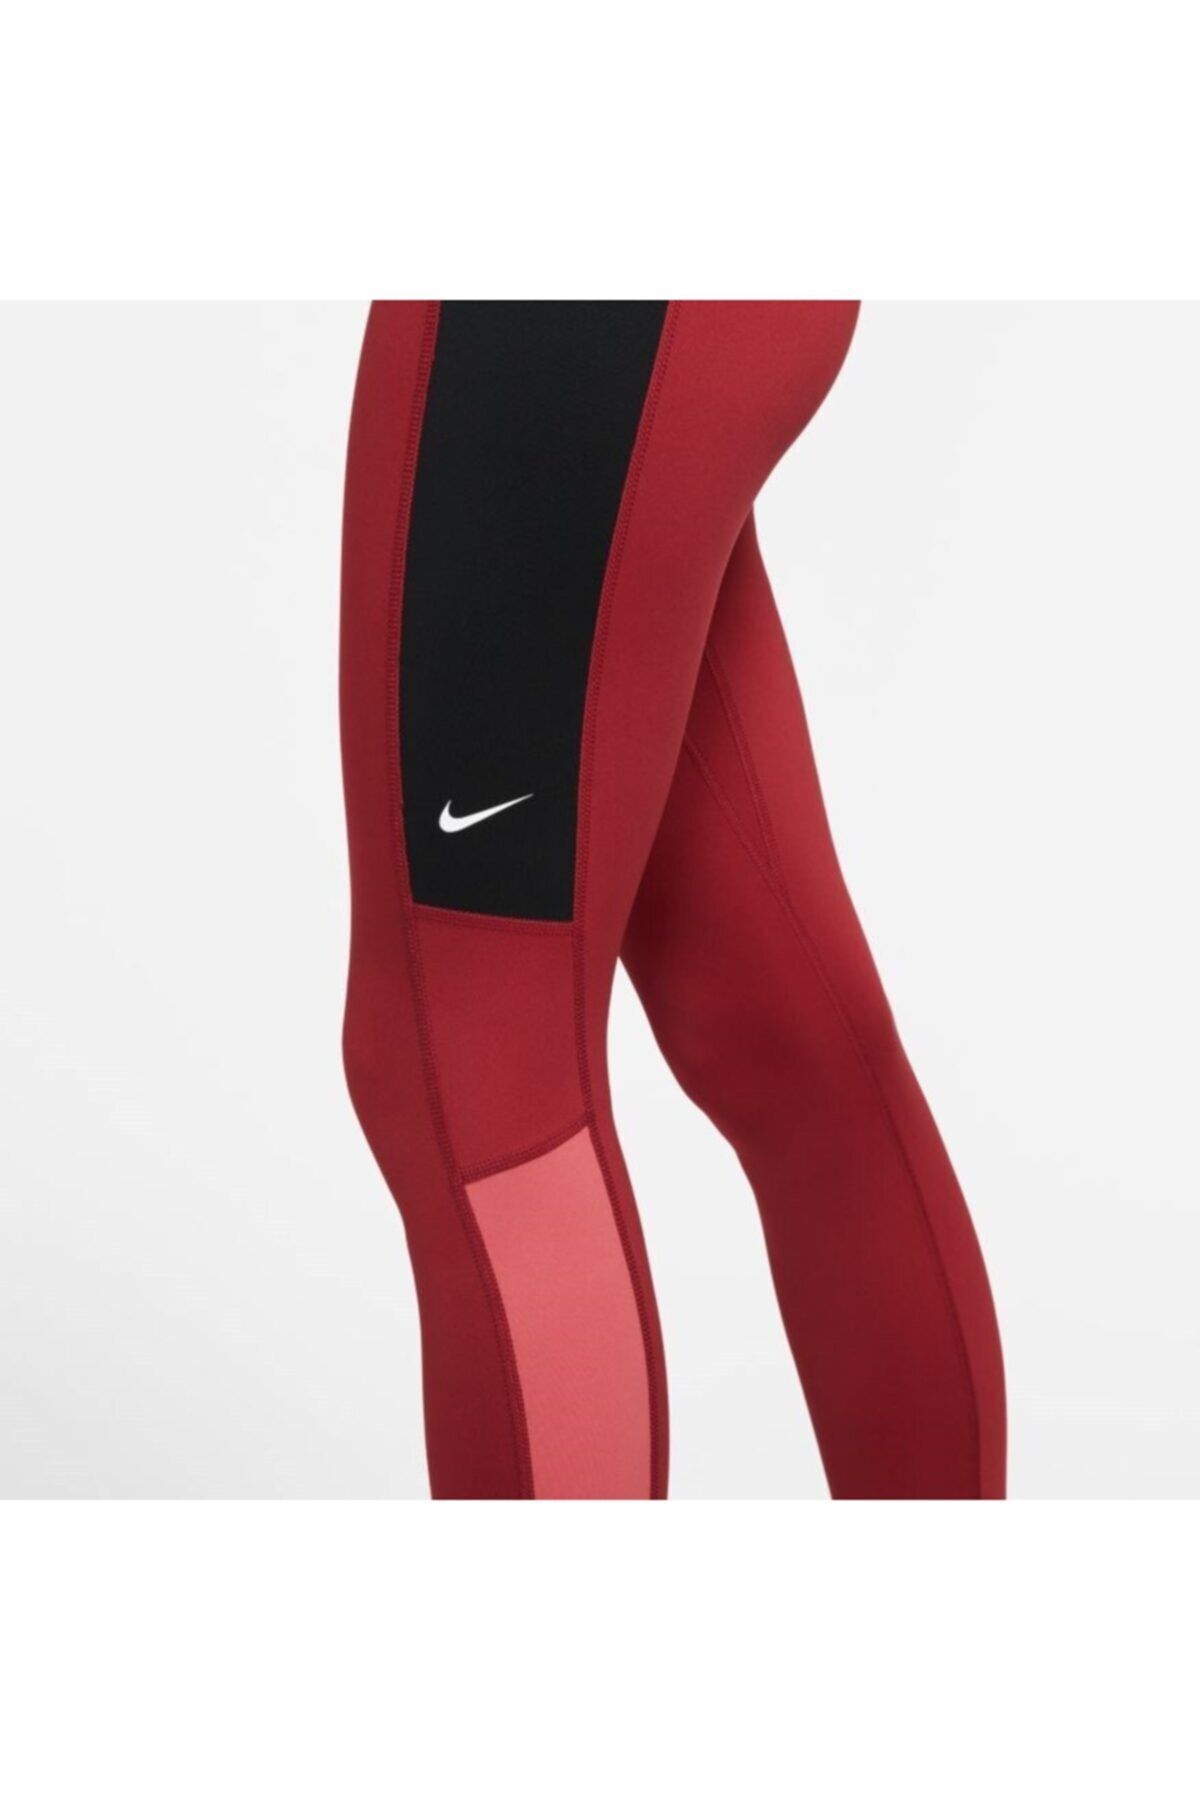 Nike One Women Navy/Curry/Brush Mid-Rise Color-Block Leggings (DM7270-410)  S/M/L 